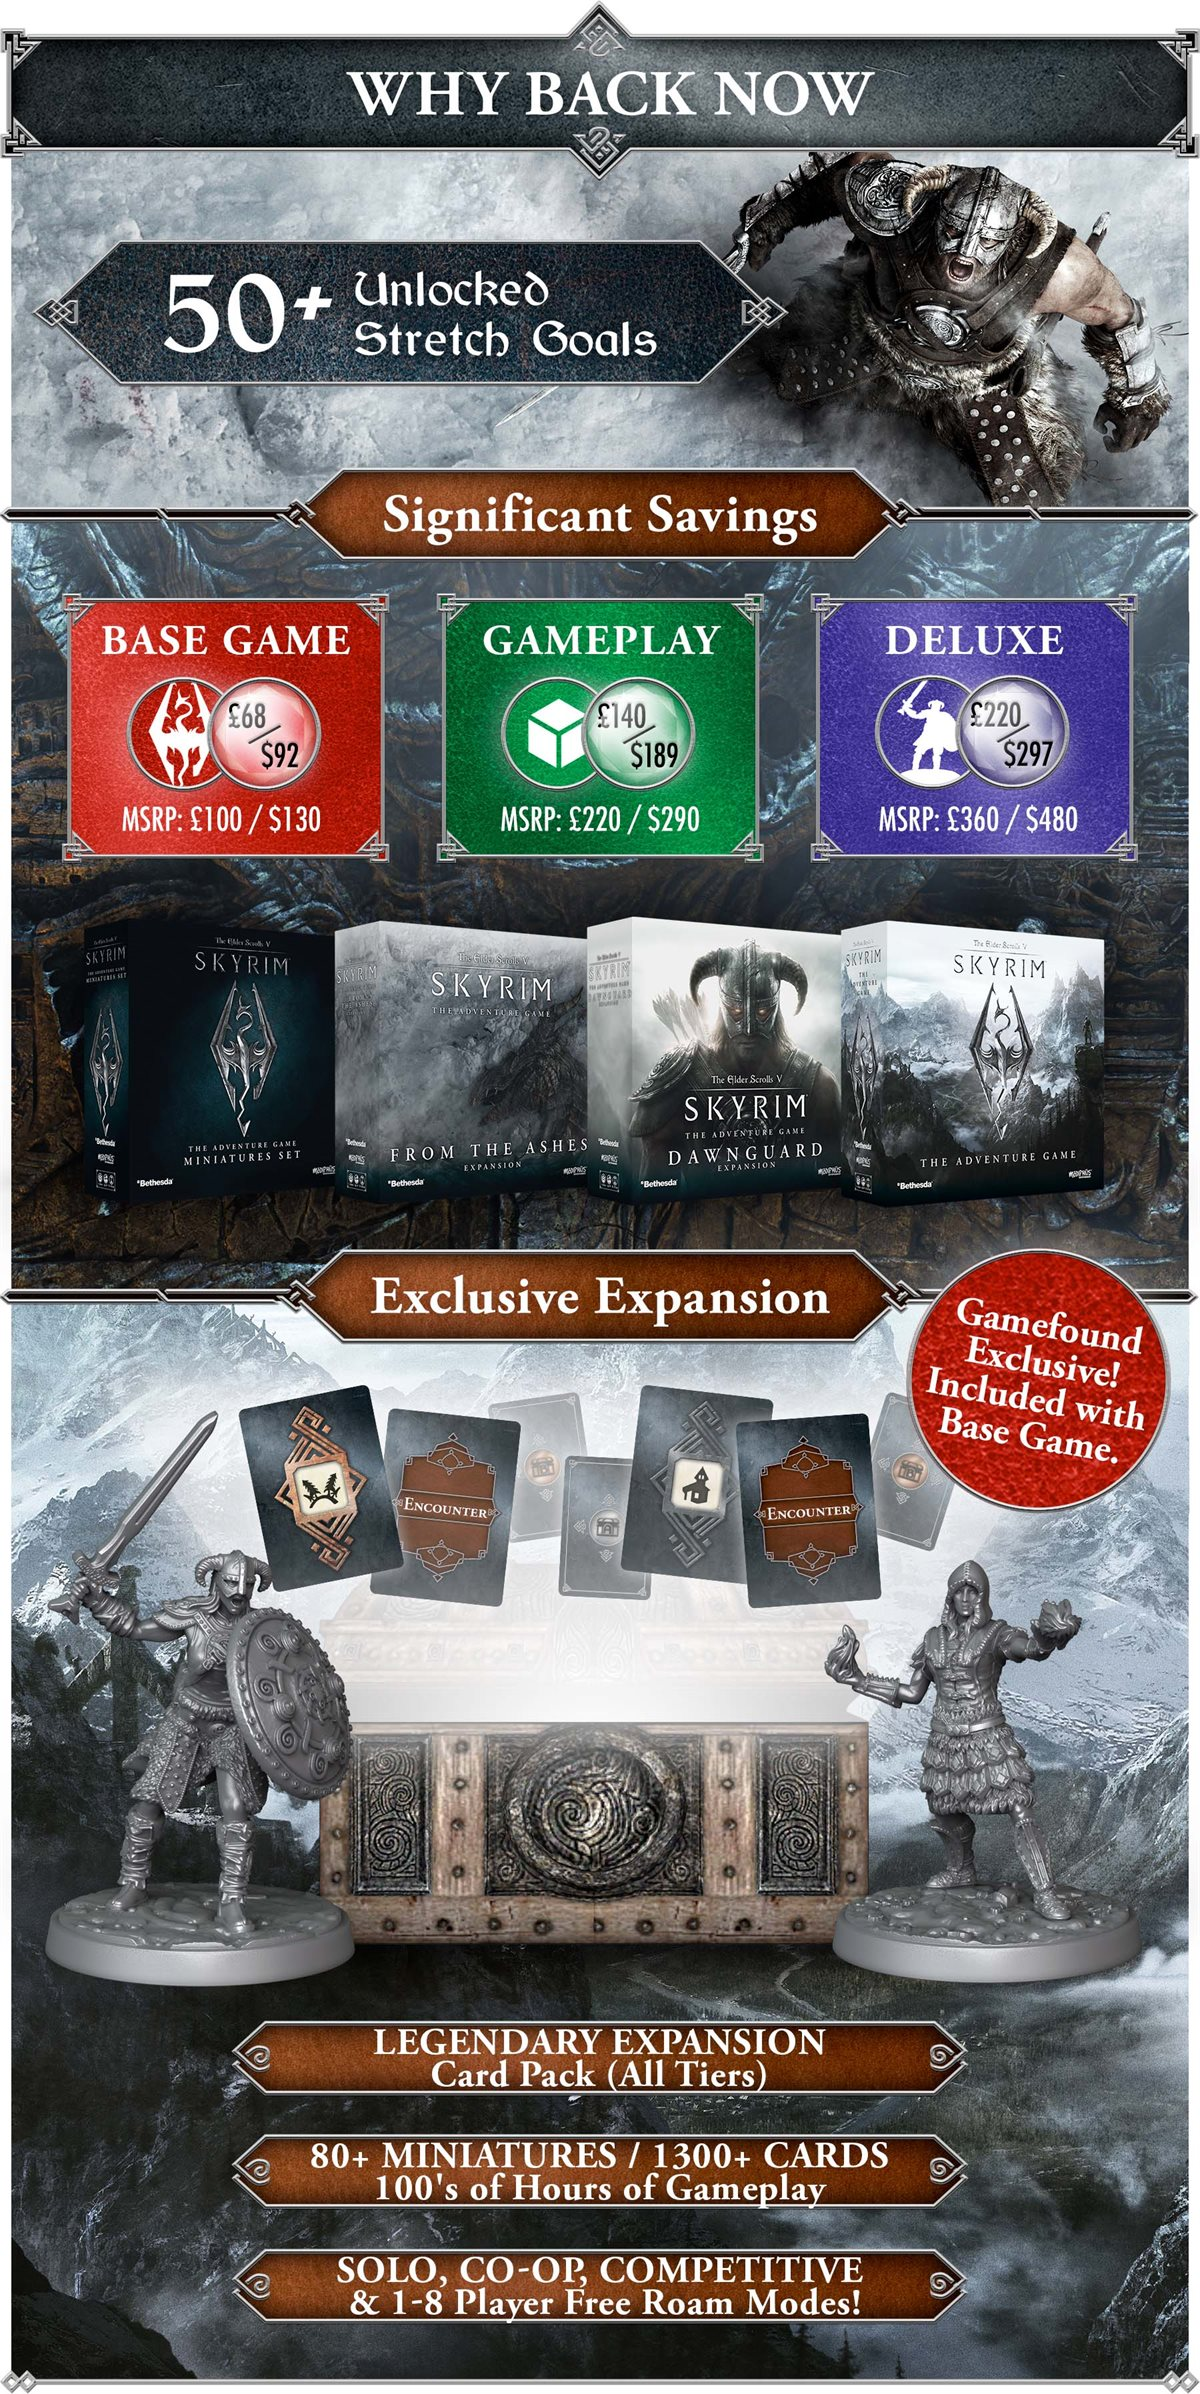 The Elder Scrolls V: Skyrim The Adventure Game by MODIPHIUS ENTERTAINMENT -  The Elder Scrolls: Call to Arms Starter Bundle (resin version) - Gamefound